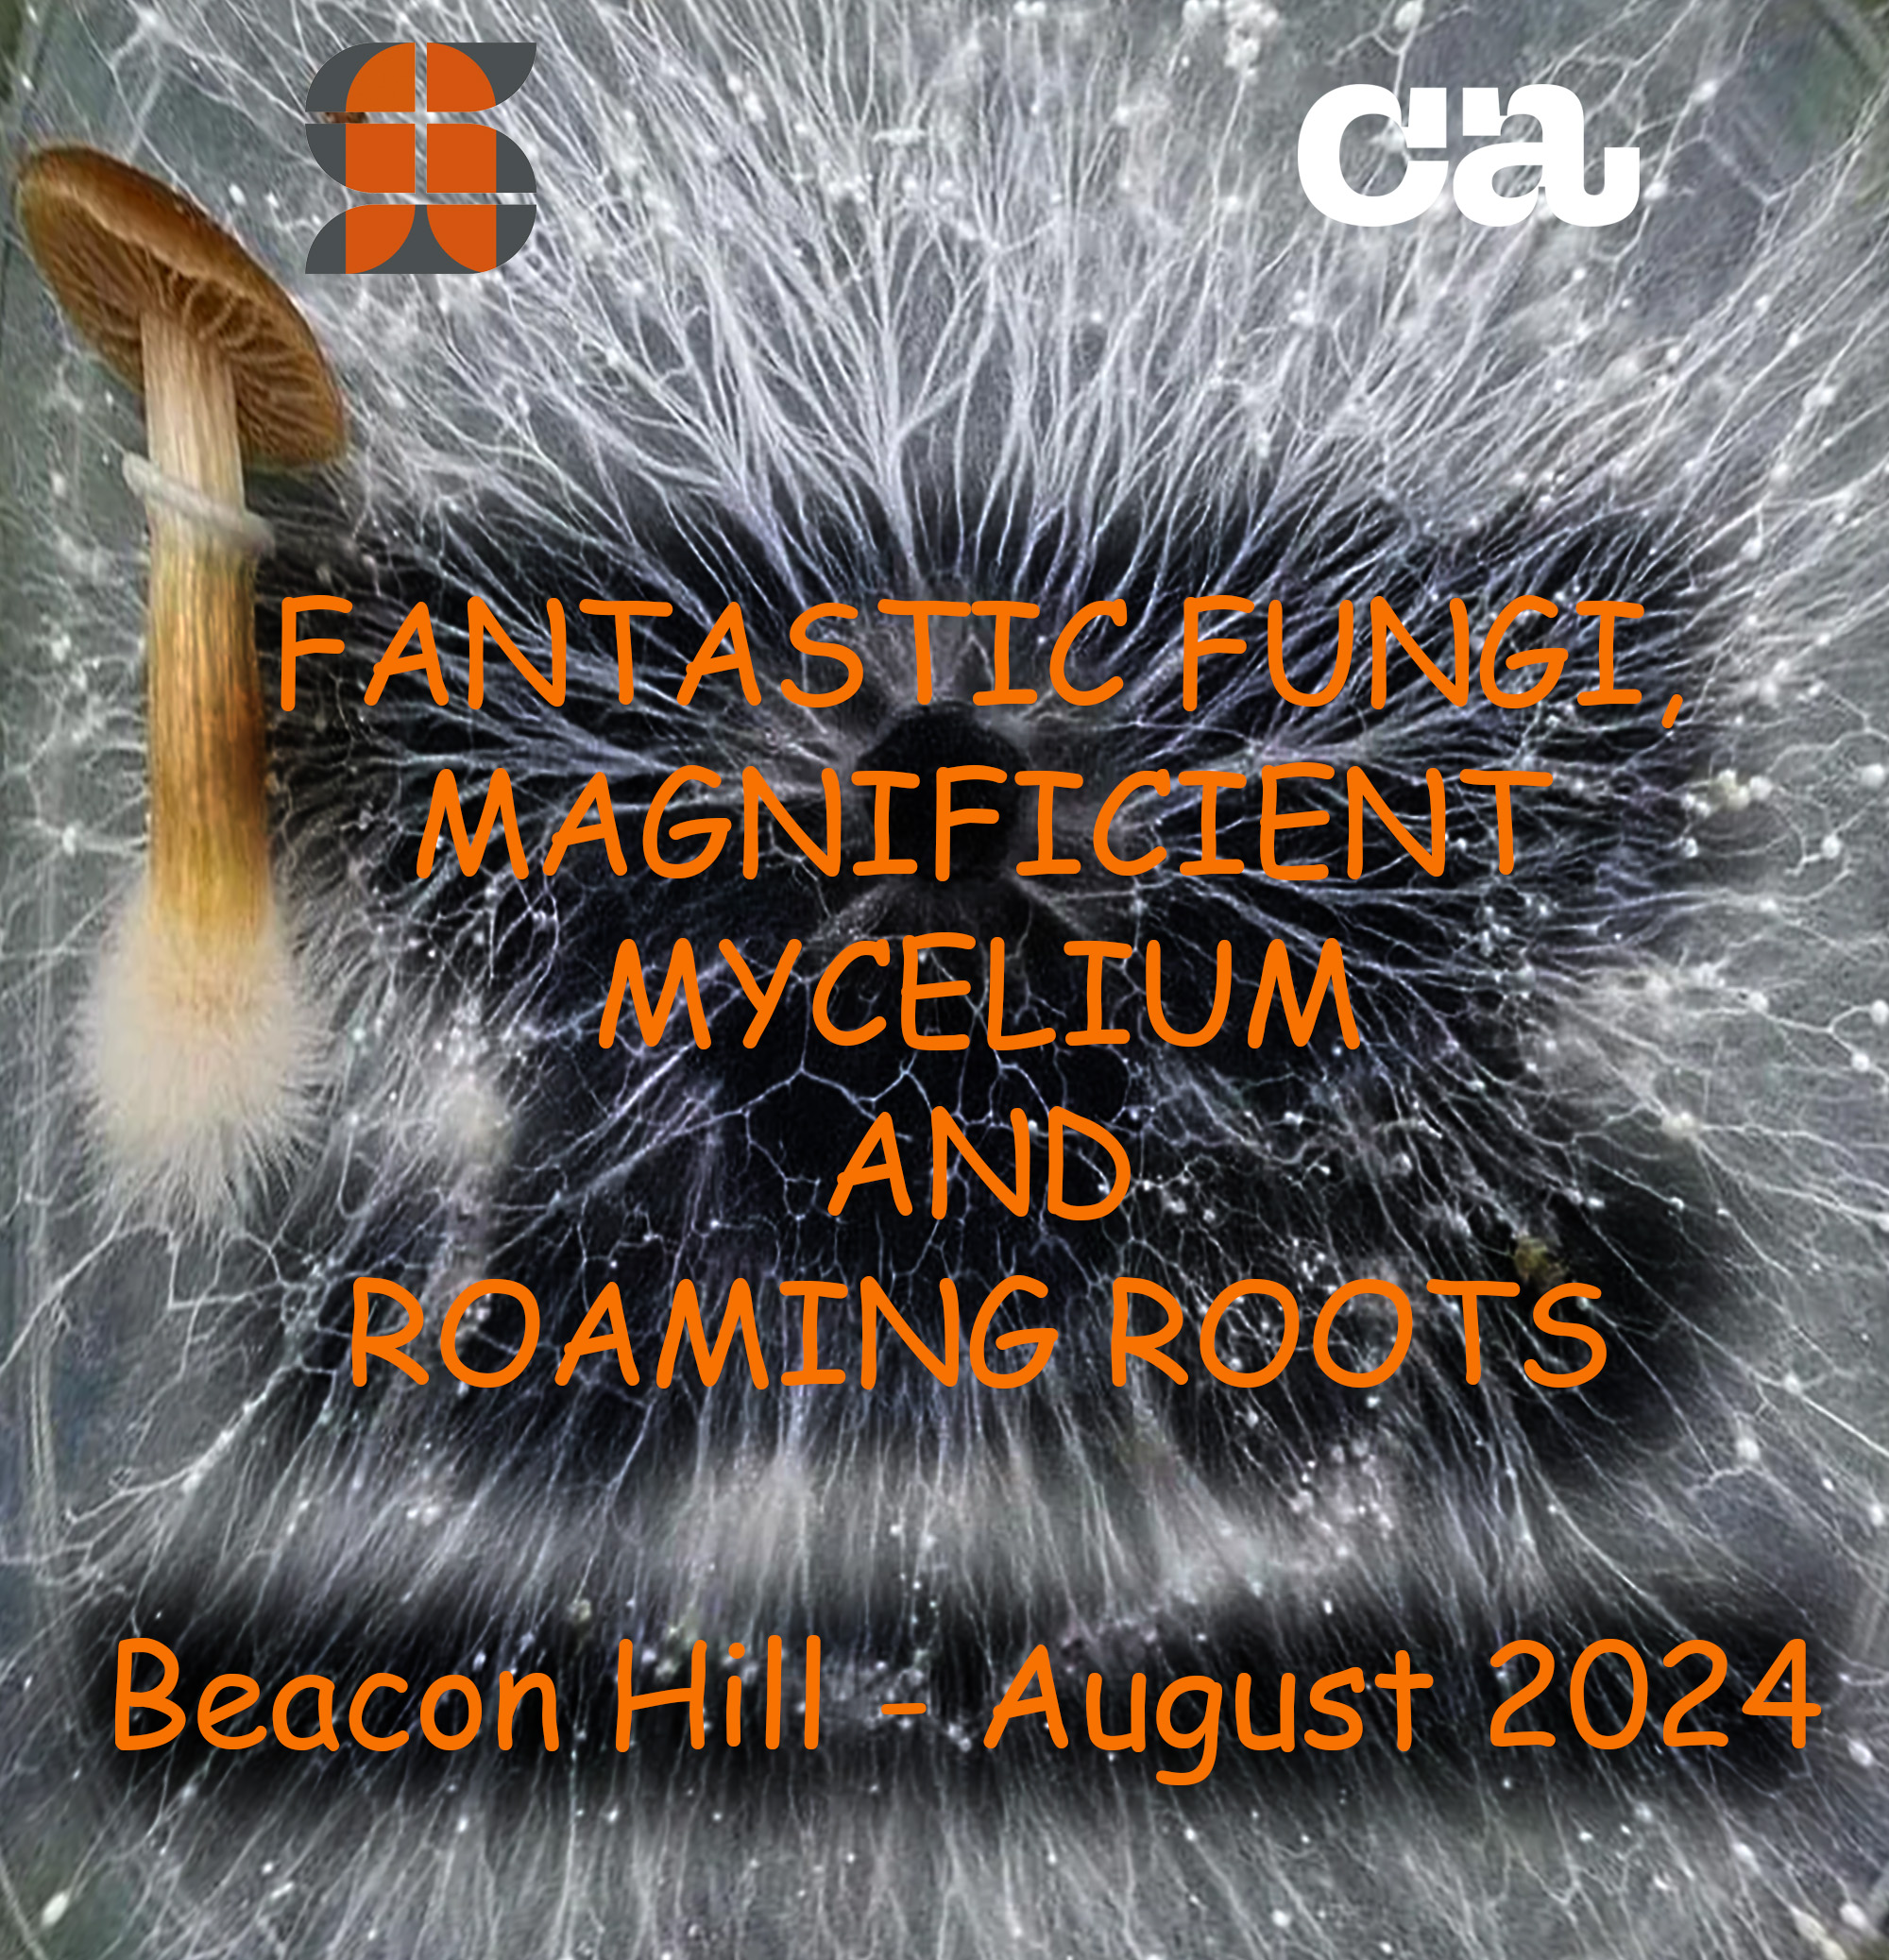 Fungi, mycelium and roots!